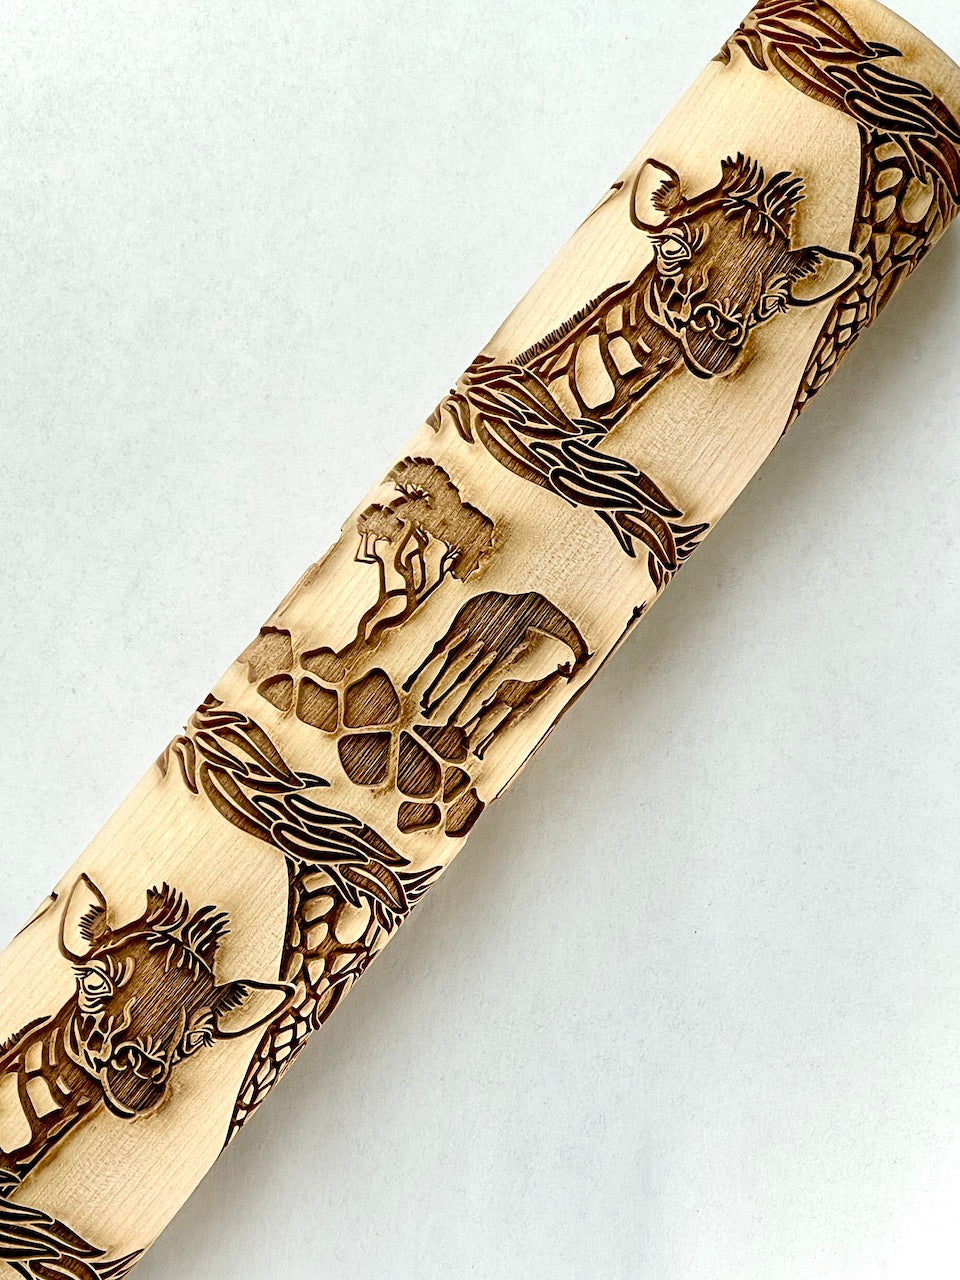 Giraffe- Textured Rolling Pin